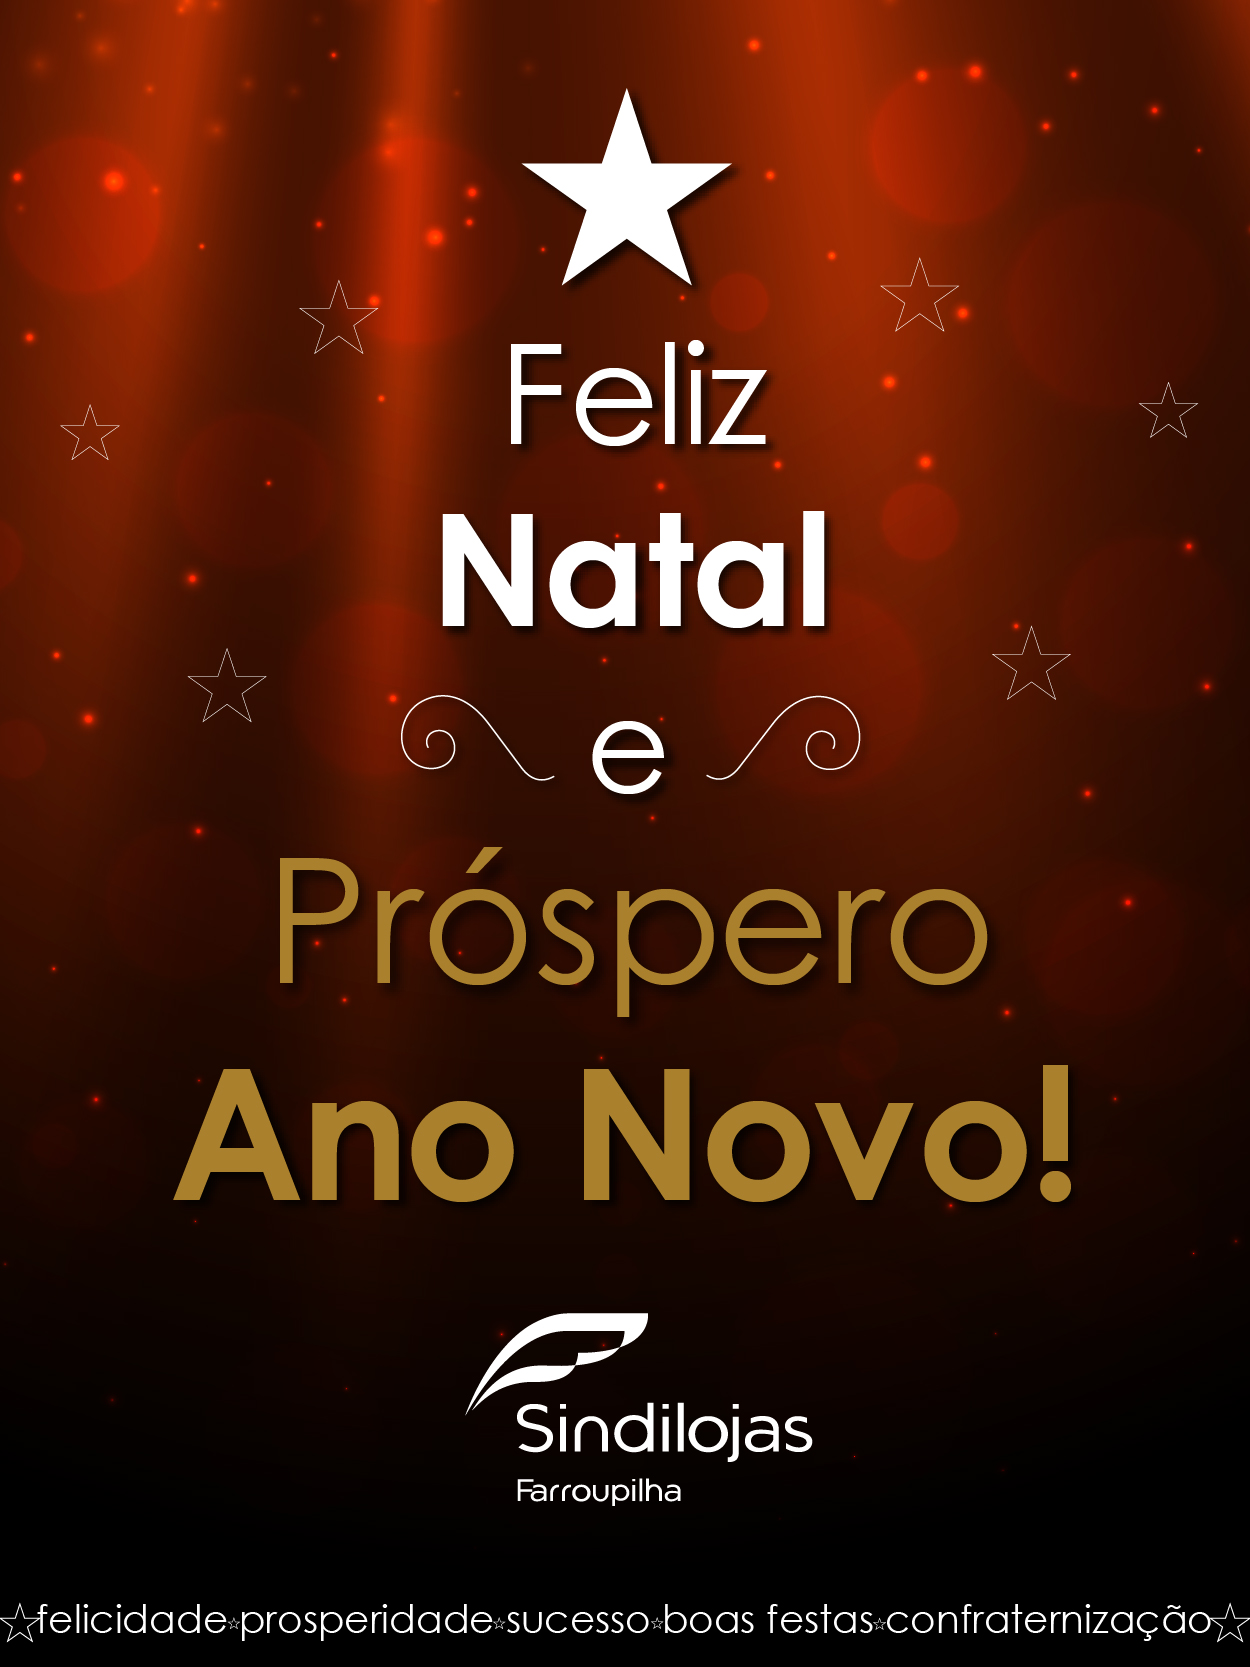 O Sindilojas deseja a todos Feliz Natal e Próspero Ano Novo! .:: Sindilojas  Farroupilha ::.